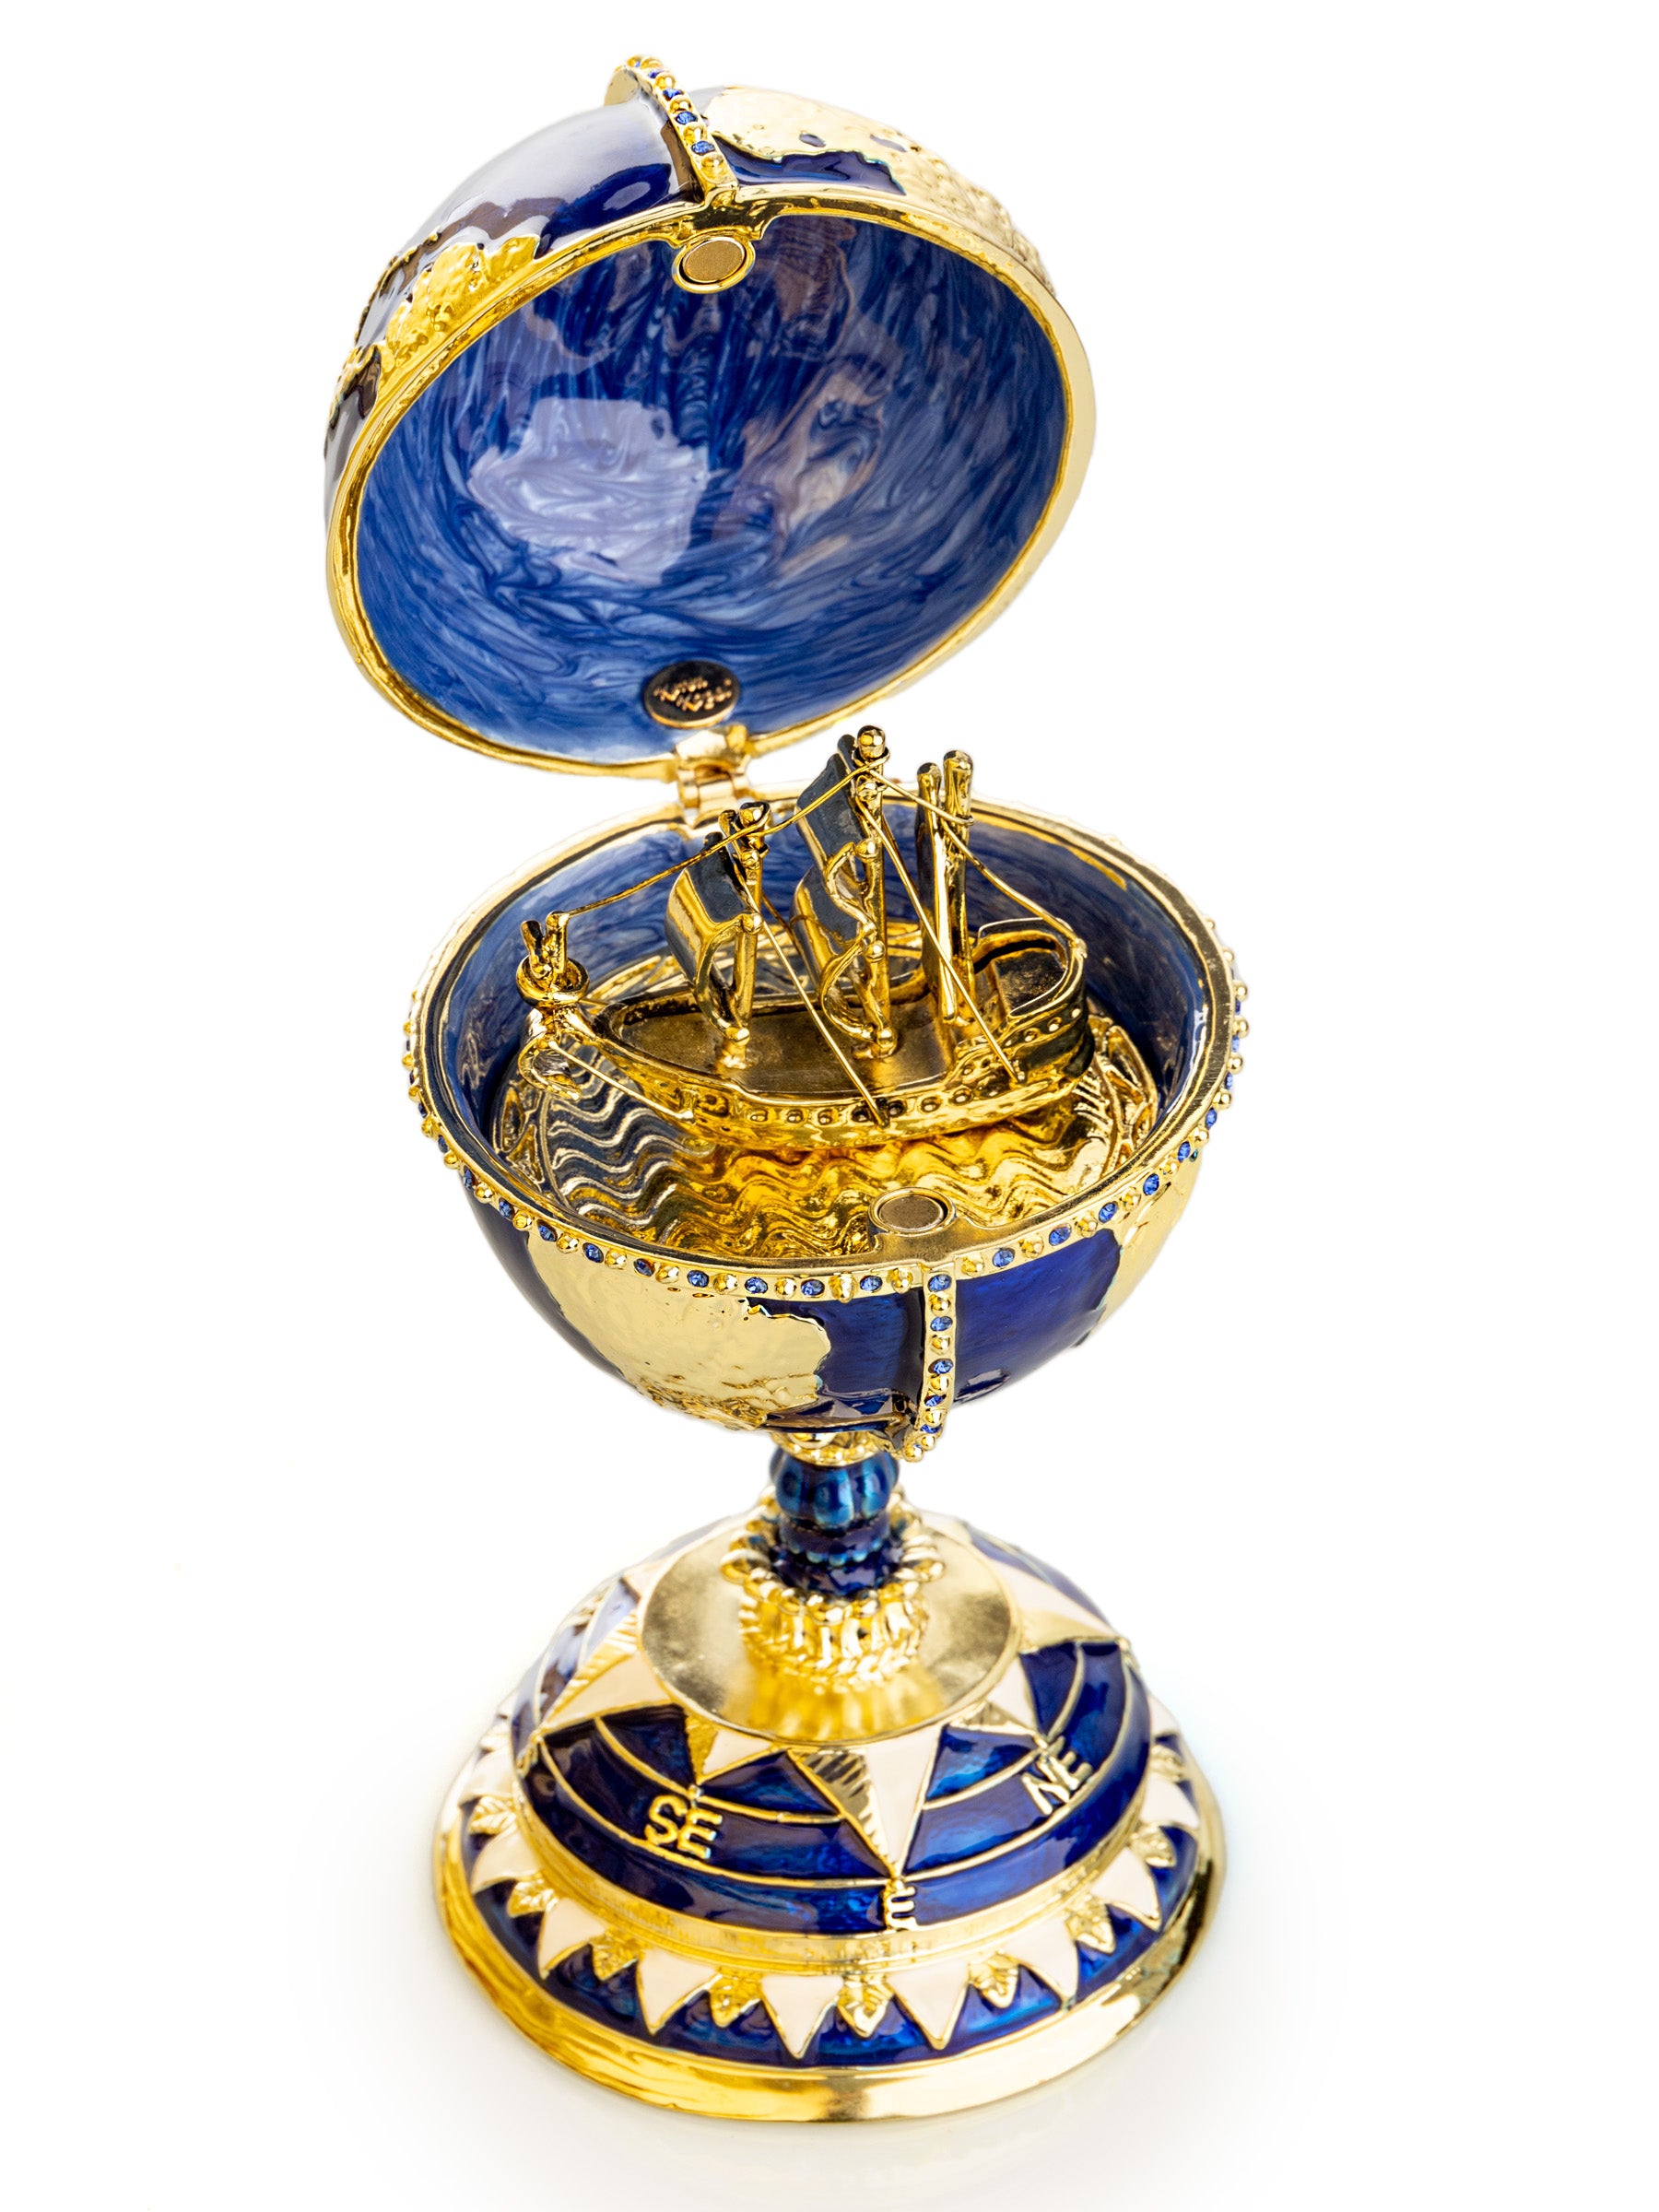 Globe Faberge Egg with Sailing ship